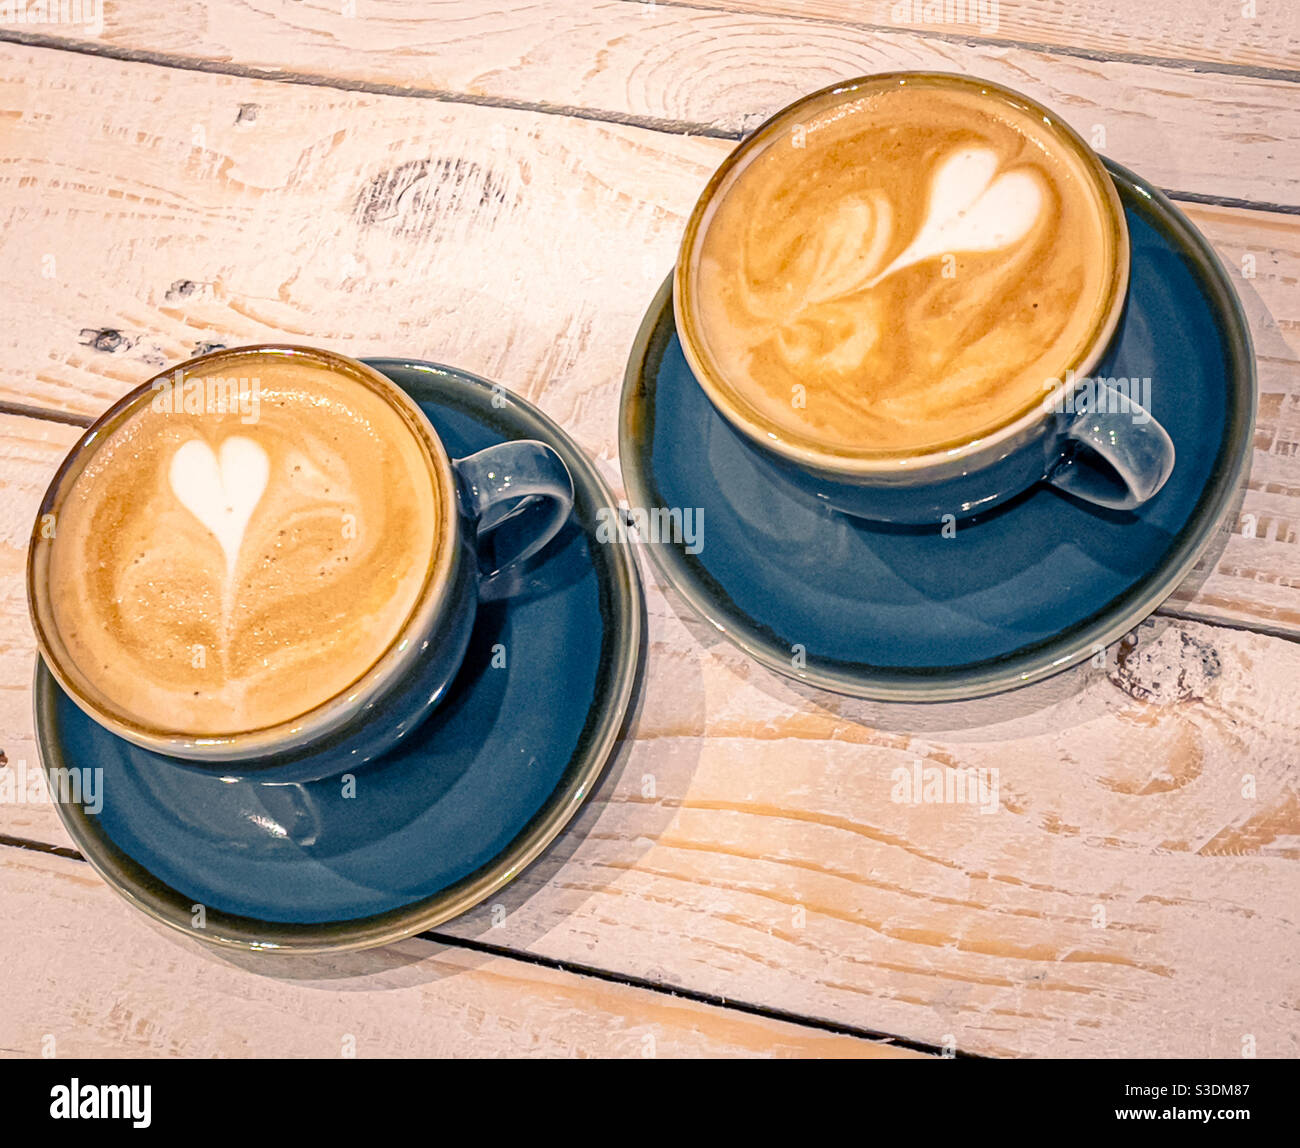 https://c8.alamy.com/compes/s3dm87/dos-tazas-de-cafe-con-arte-de-latte-en-forma-de-corazon-s3dm87.jpg